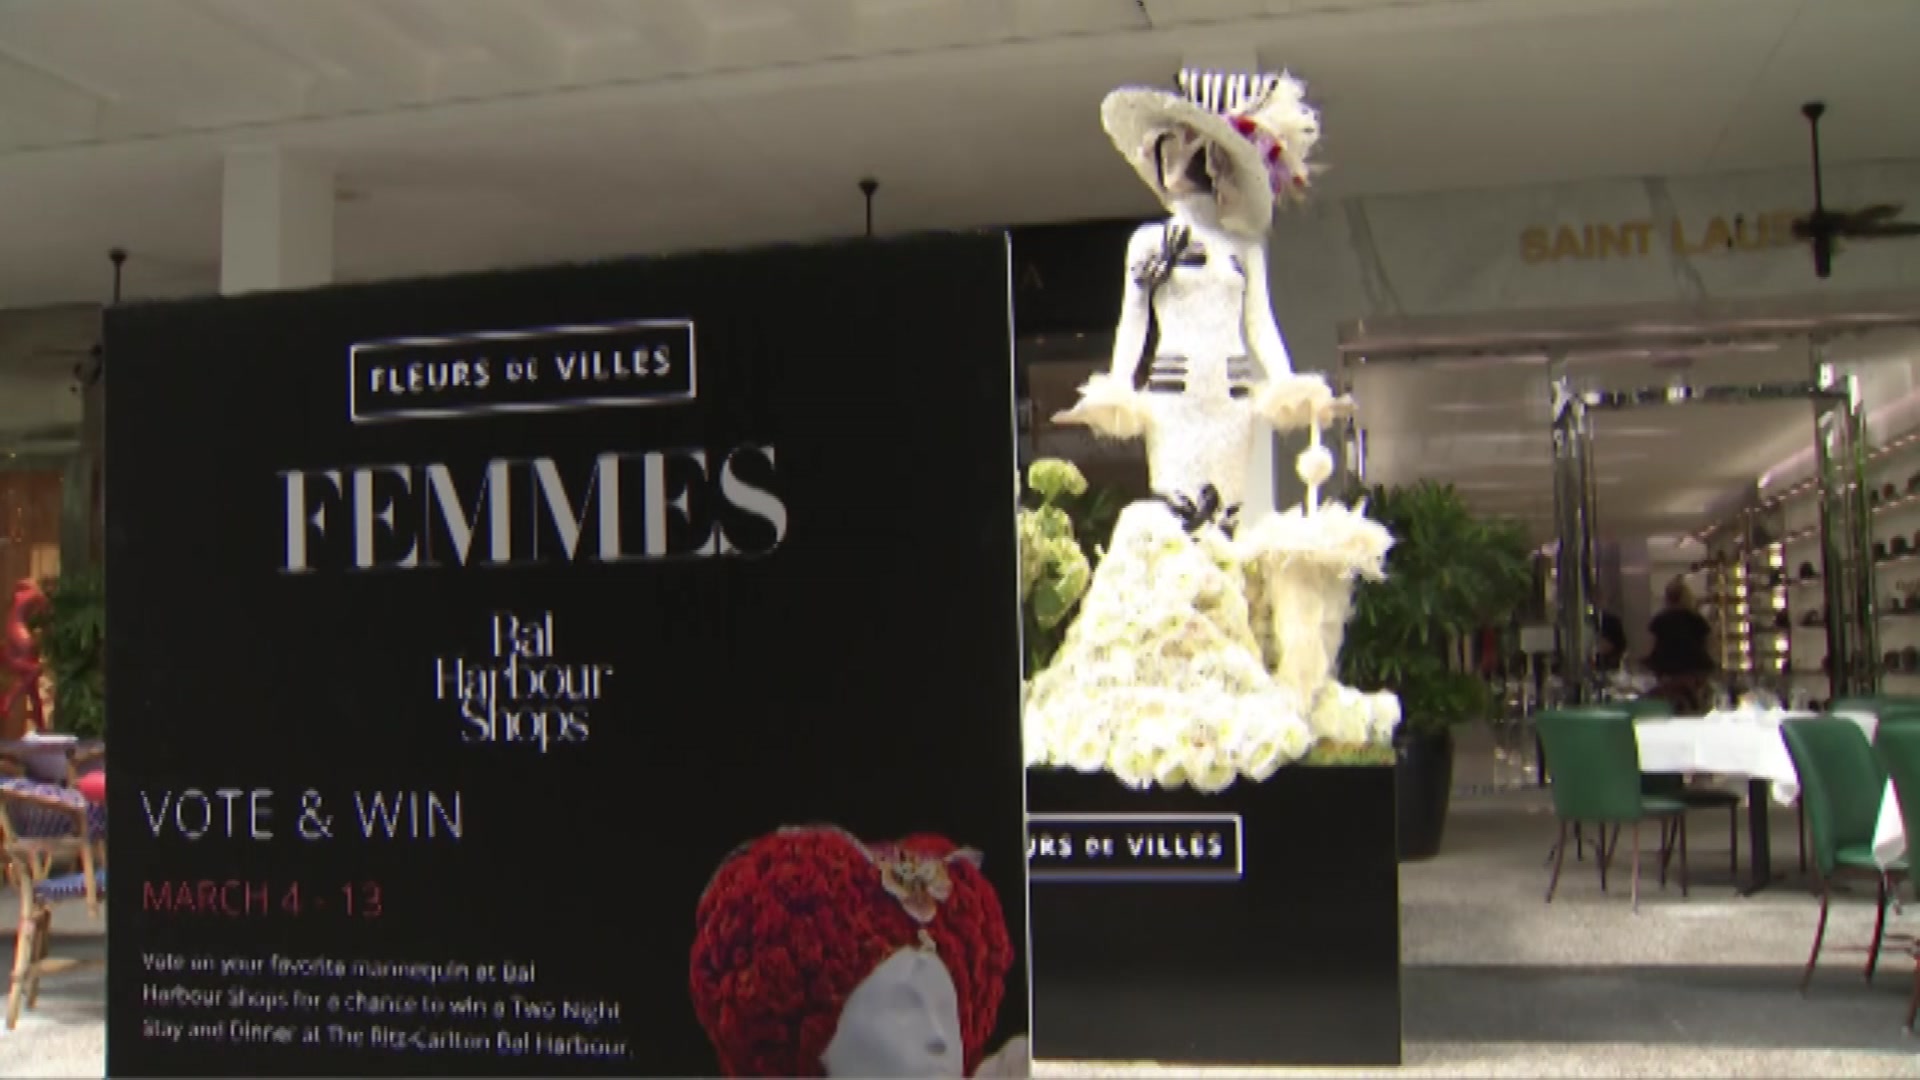 Fleurs de Villes FEMMES Is Blooming At Bal Harbour Shops For International Women’s Day